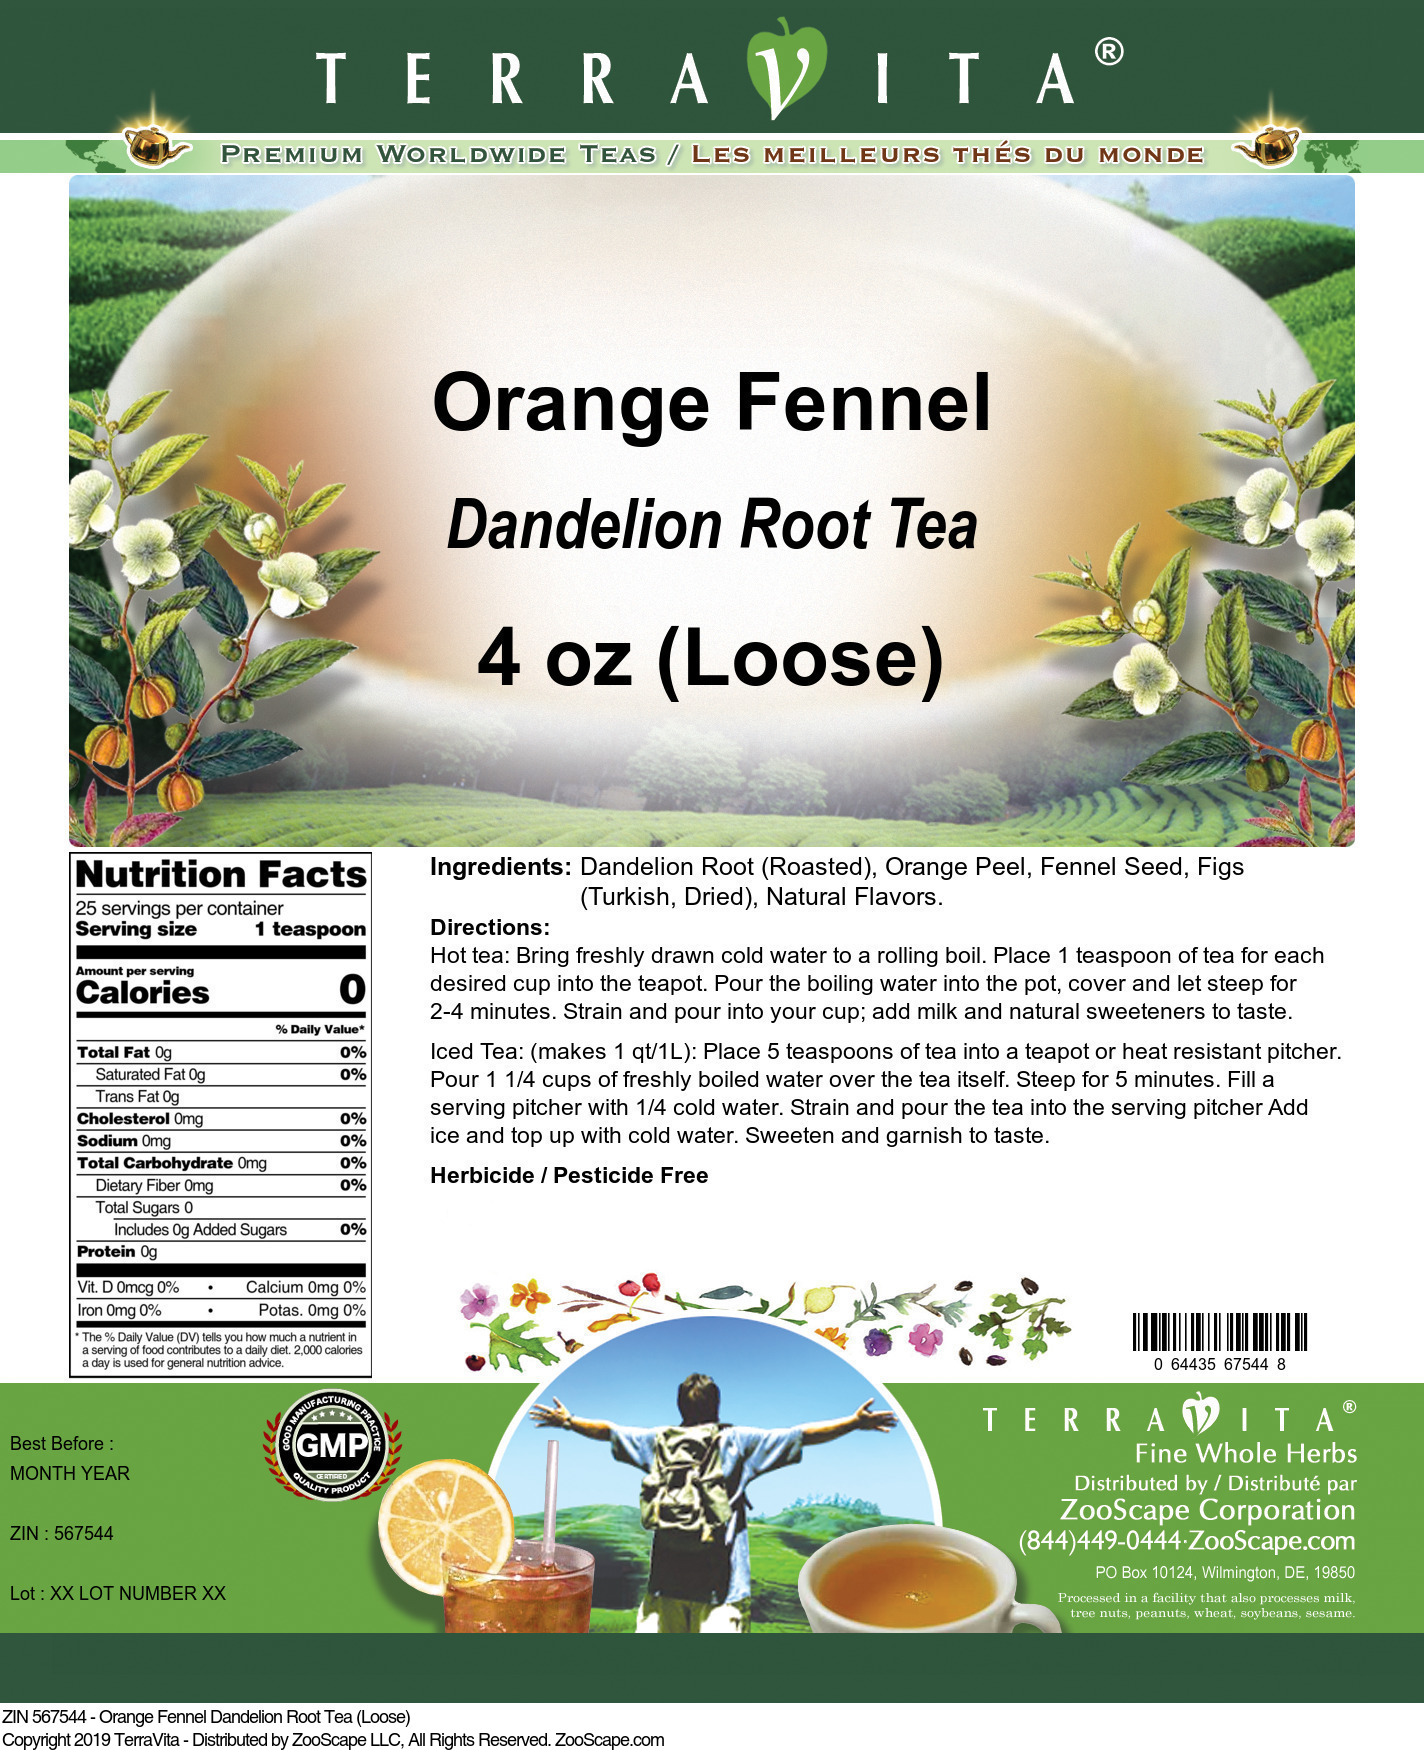 Orange Fennel Dandelion Root Tea (Loose) - Label